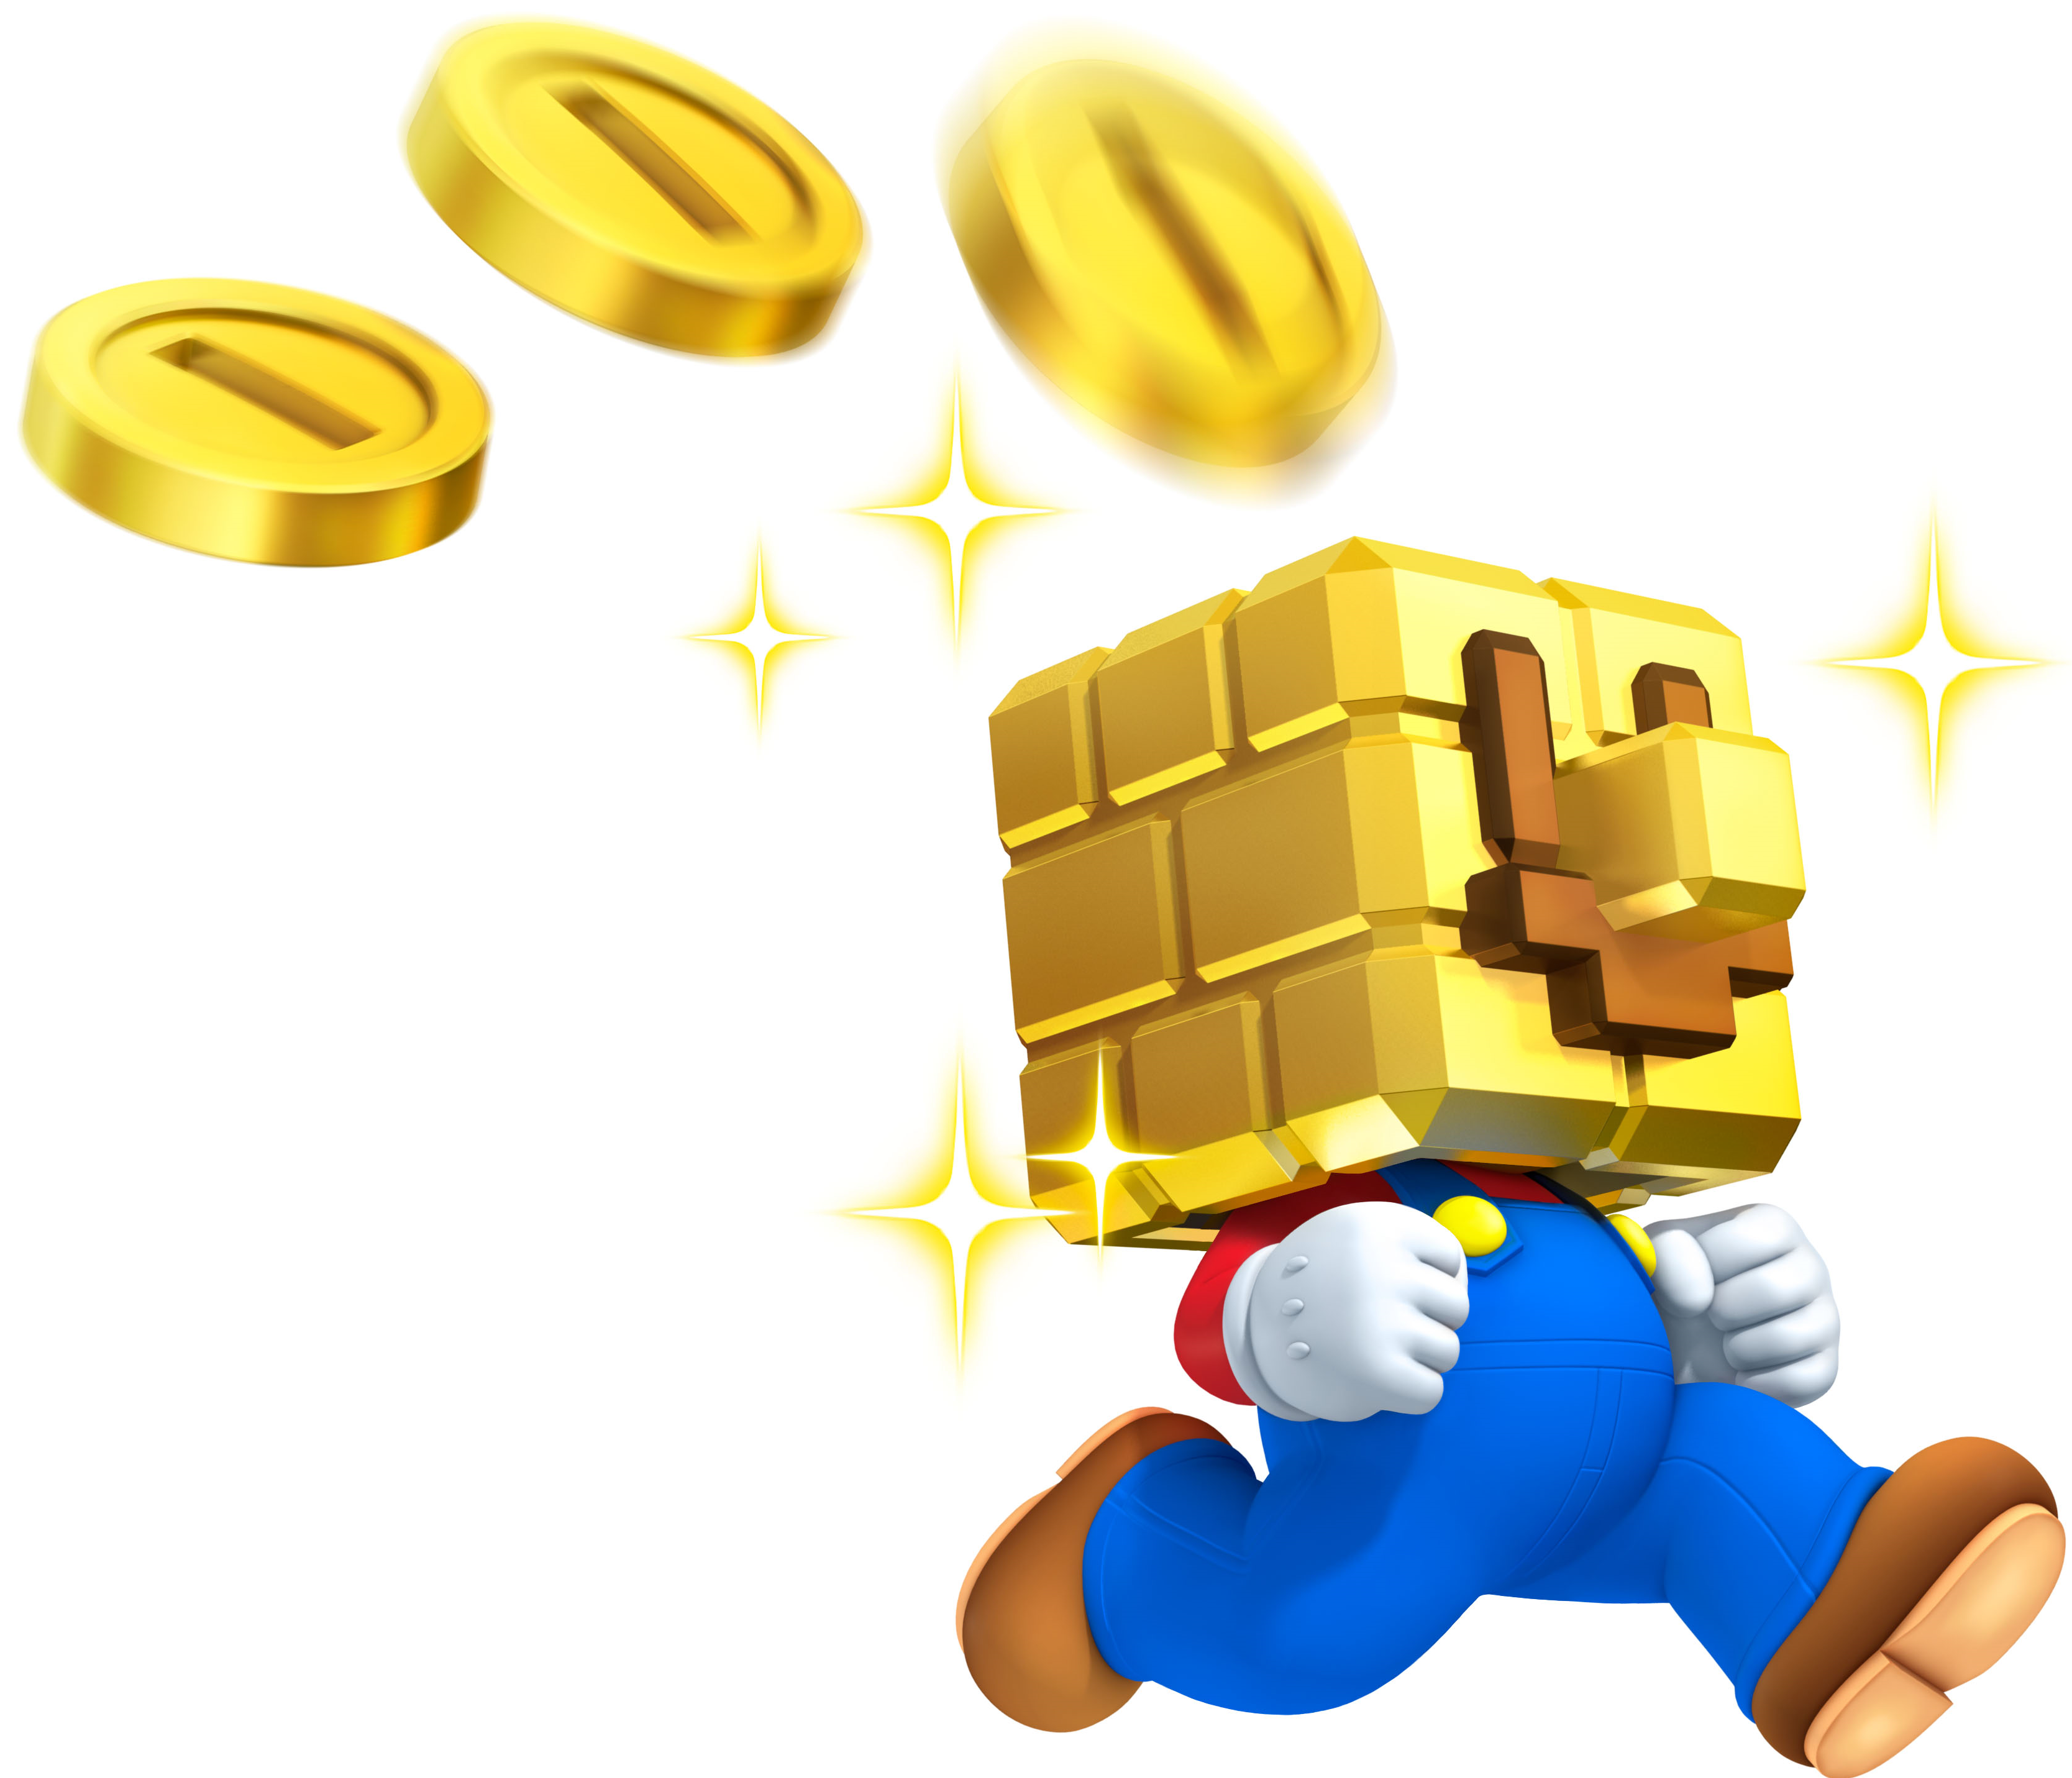 Mario prints money, coins, and hype 